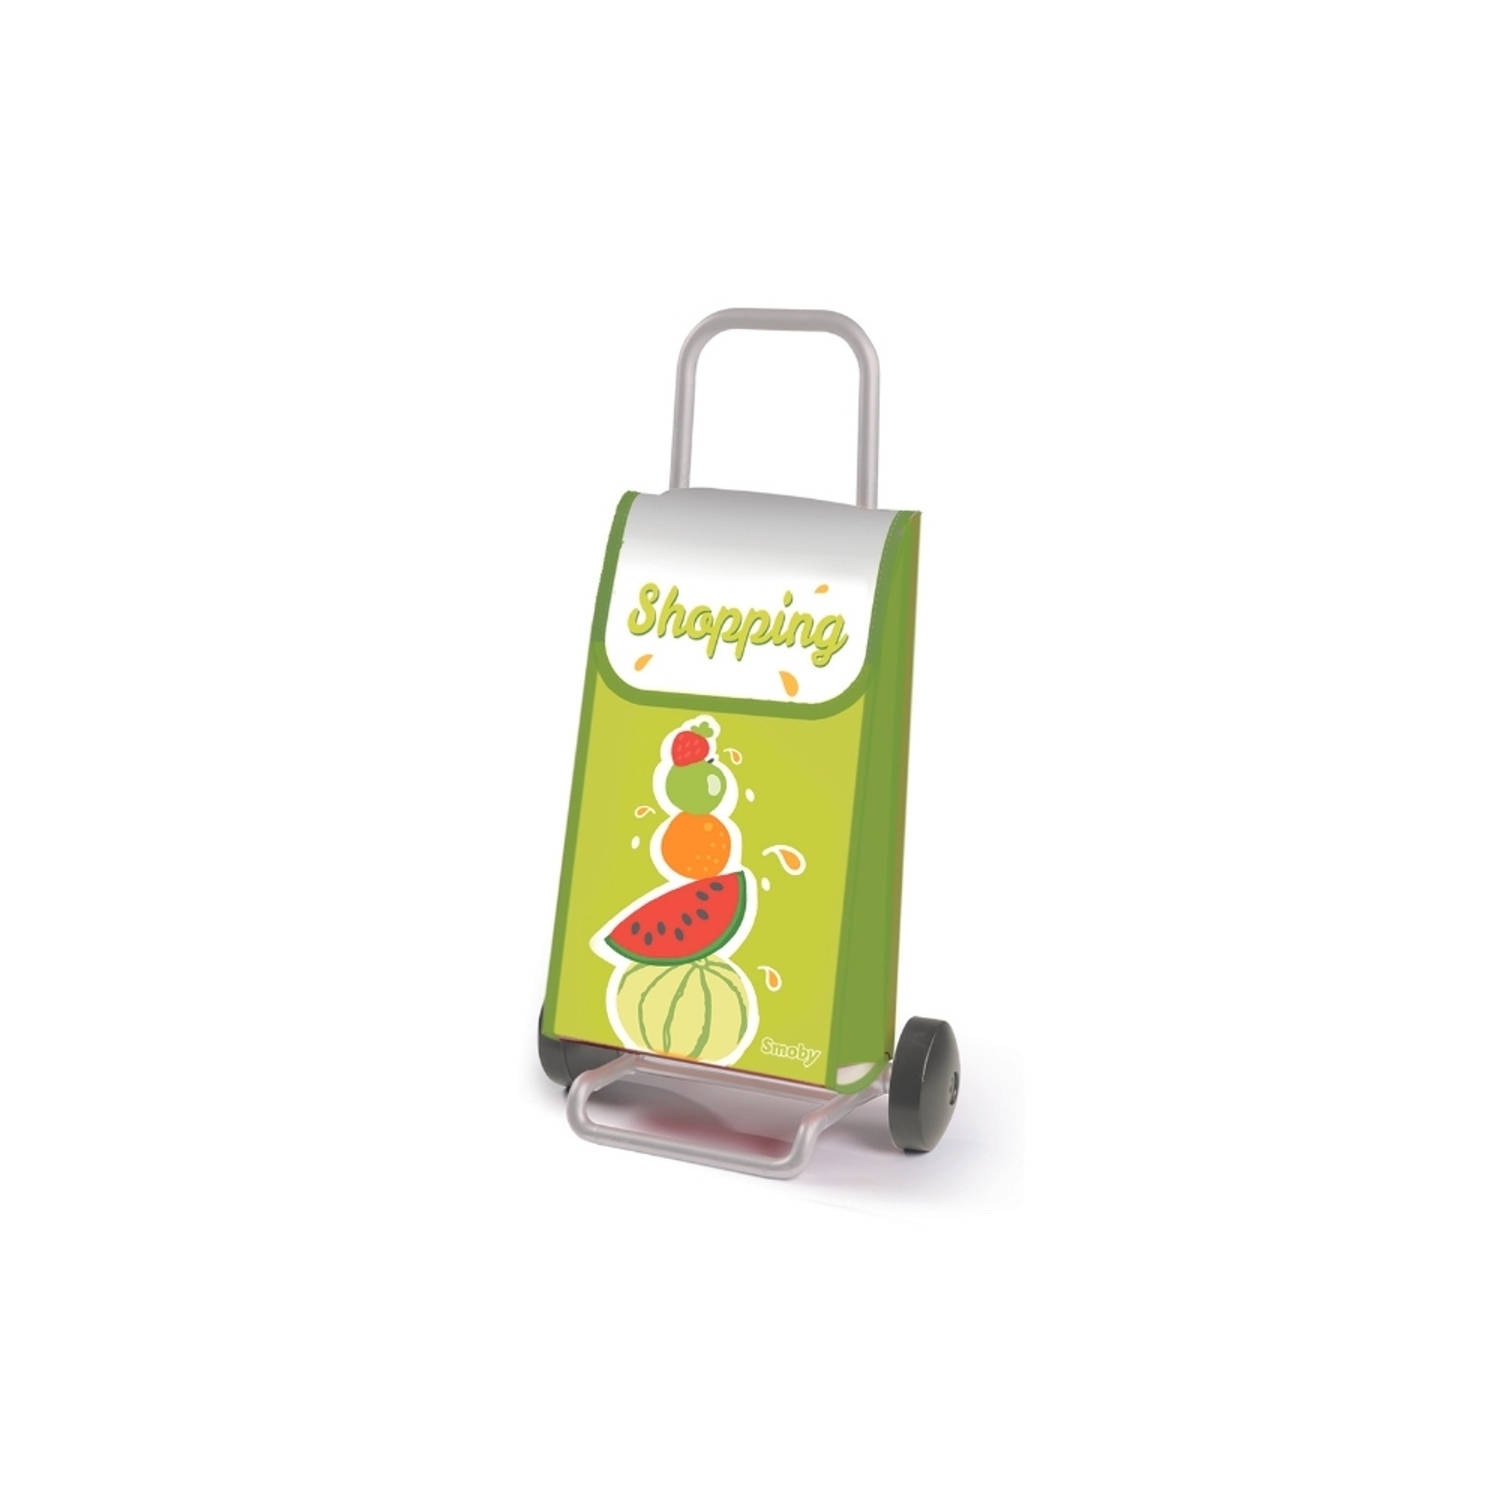 Smoby - Speelgoed Boodschappentrolley - Winkelwagen - 14 x 29 x 52 cm - Groen